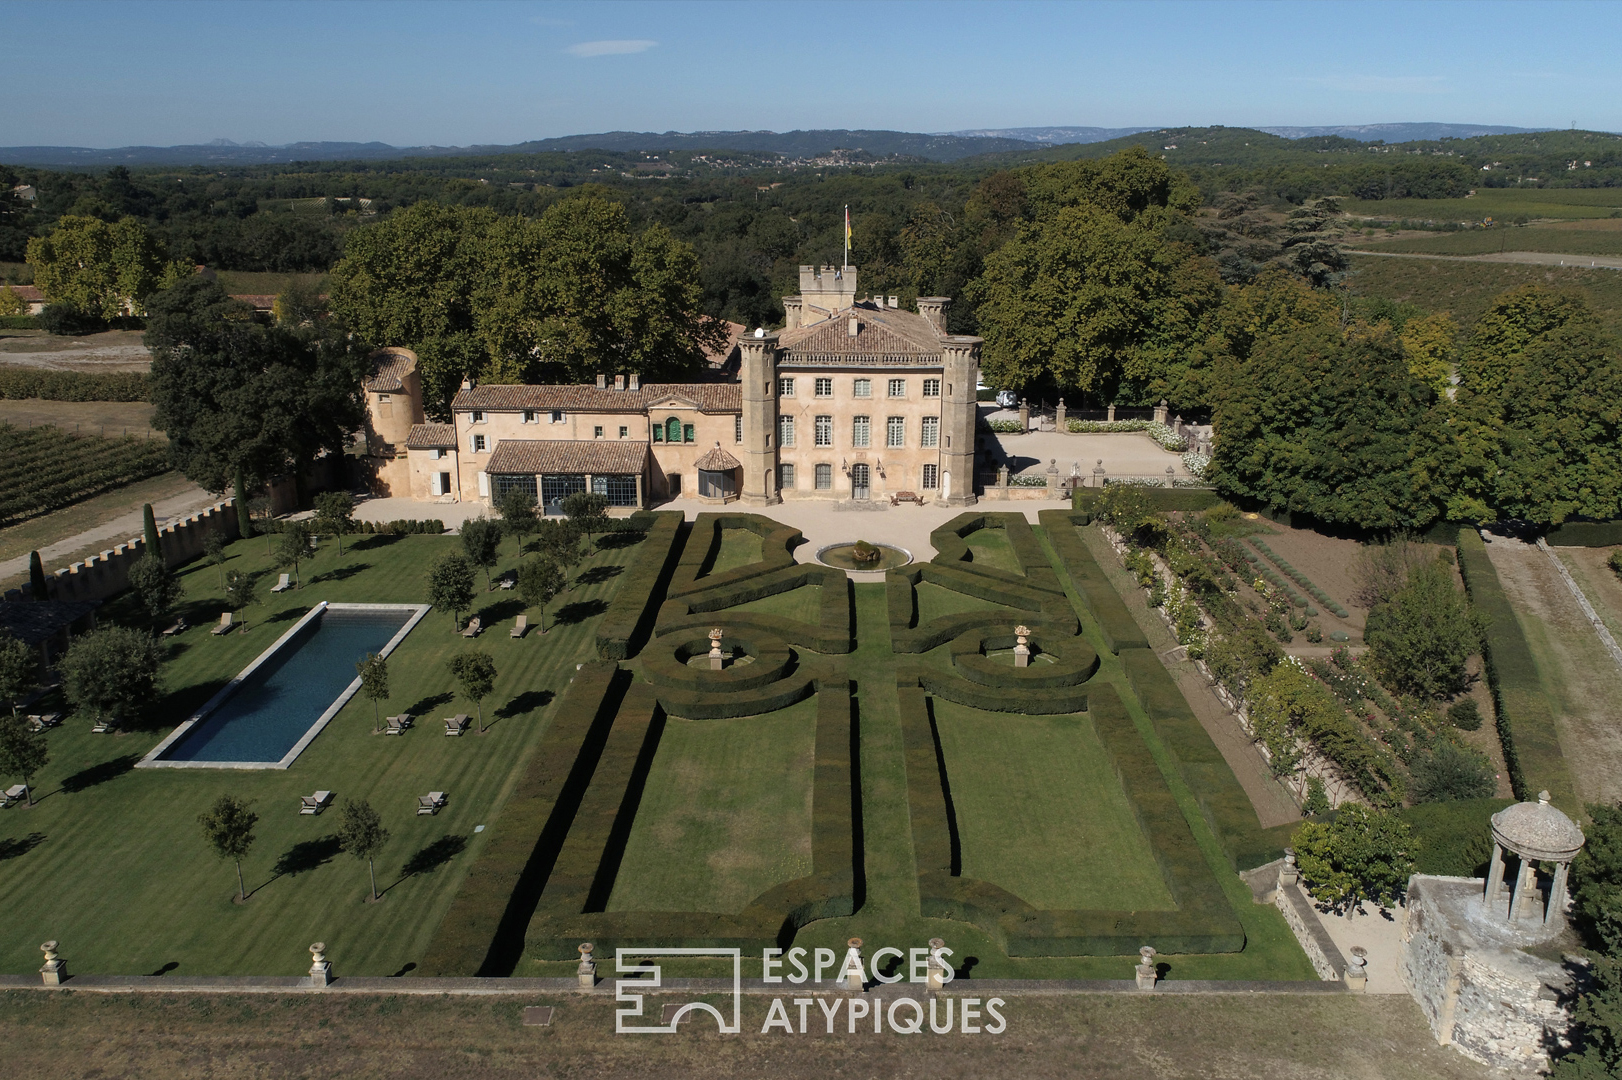 Estate with Tuscan villas